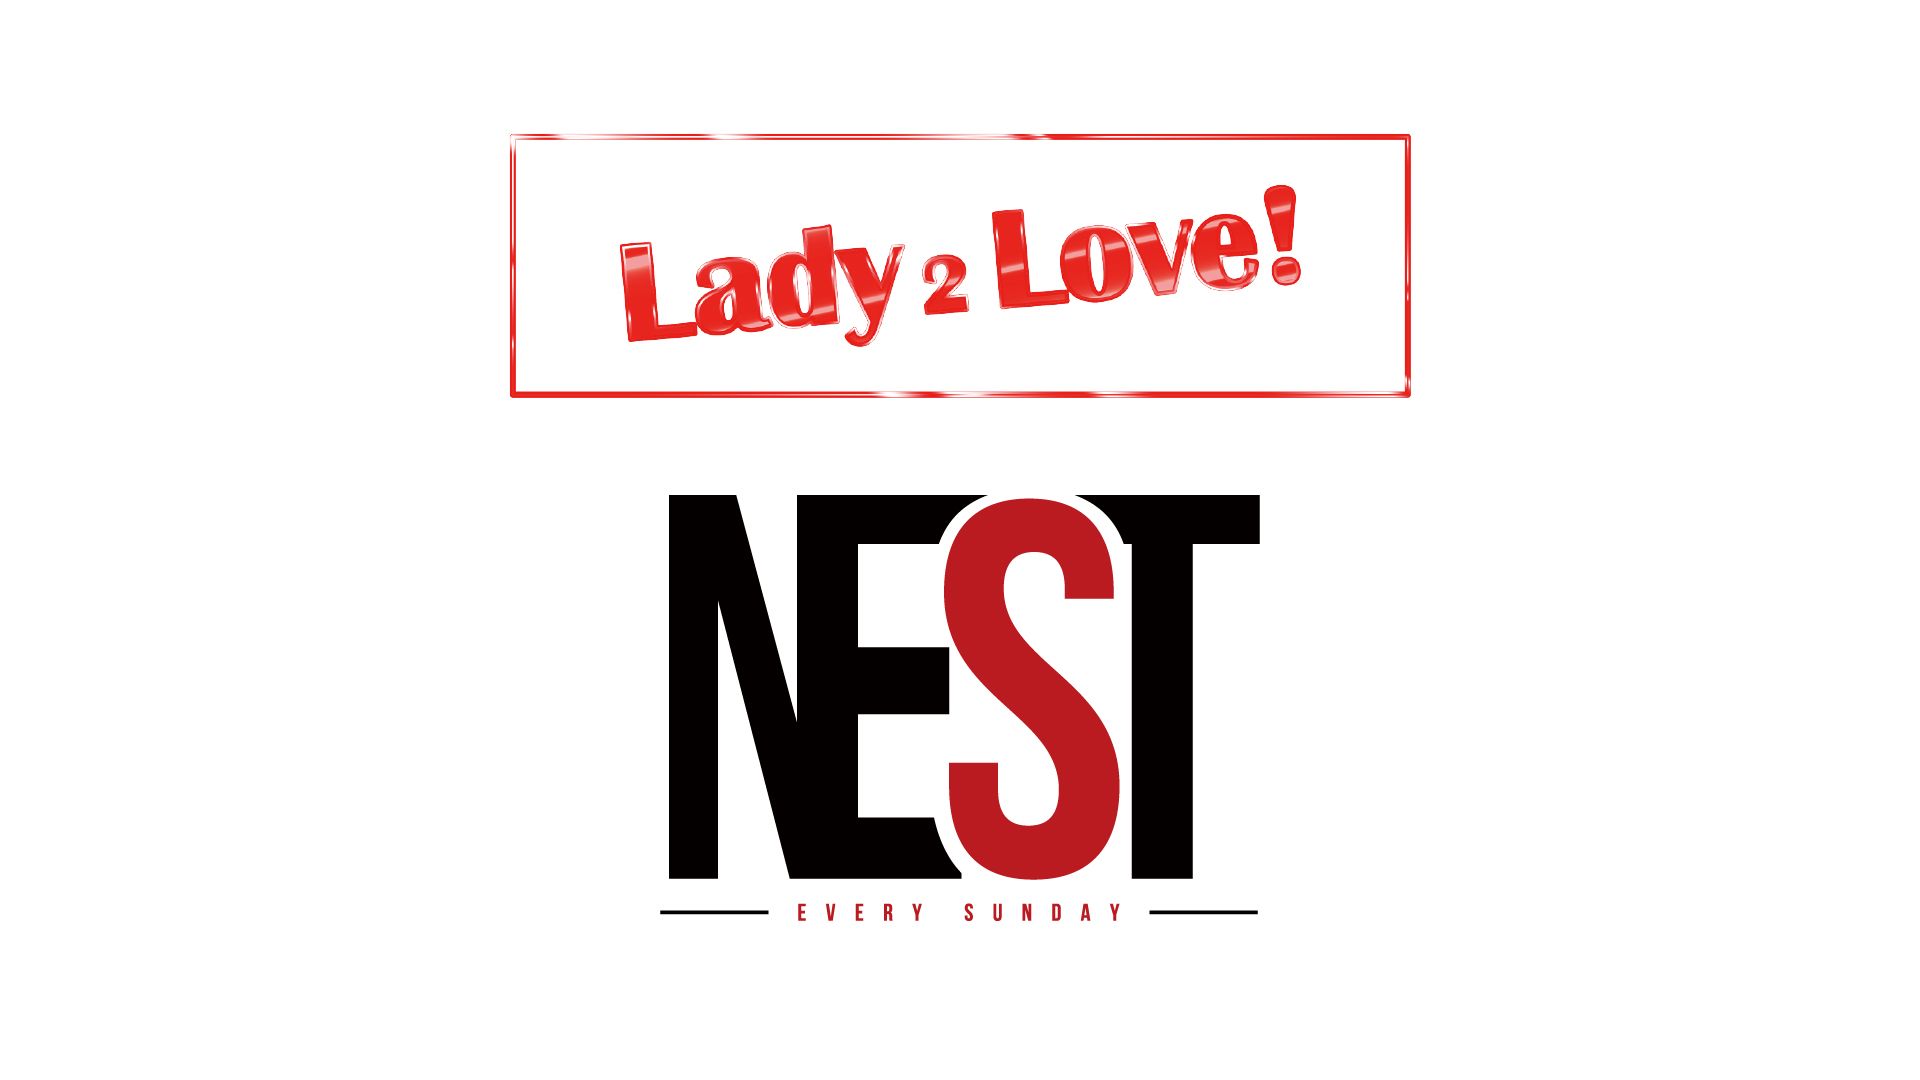 Lady 2 Love Nest 17 09 24 Sun Clubberia クラベリア